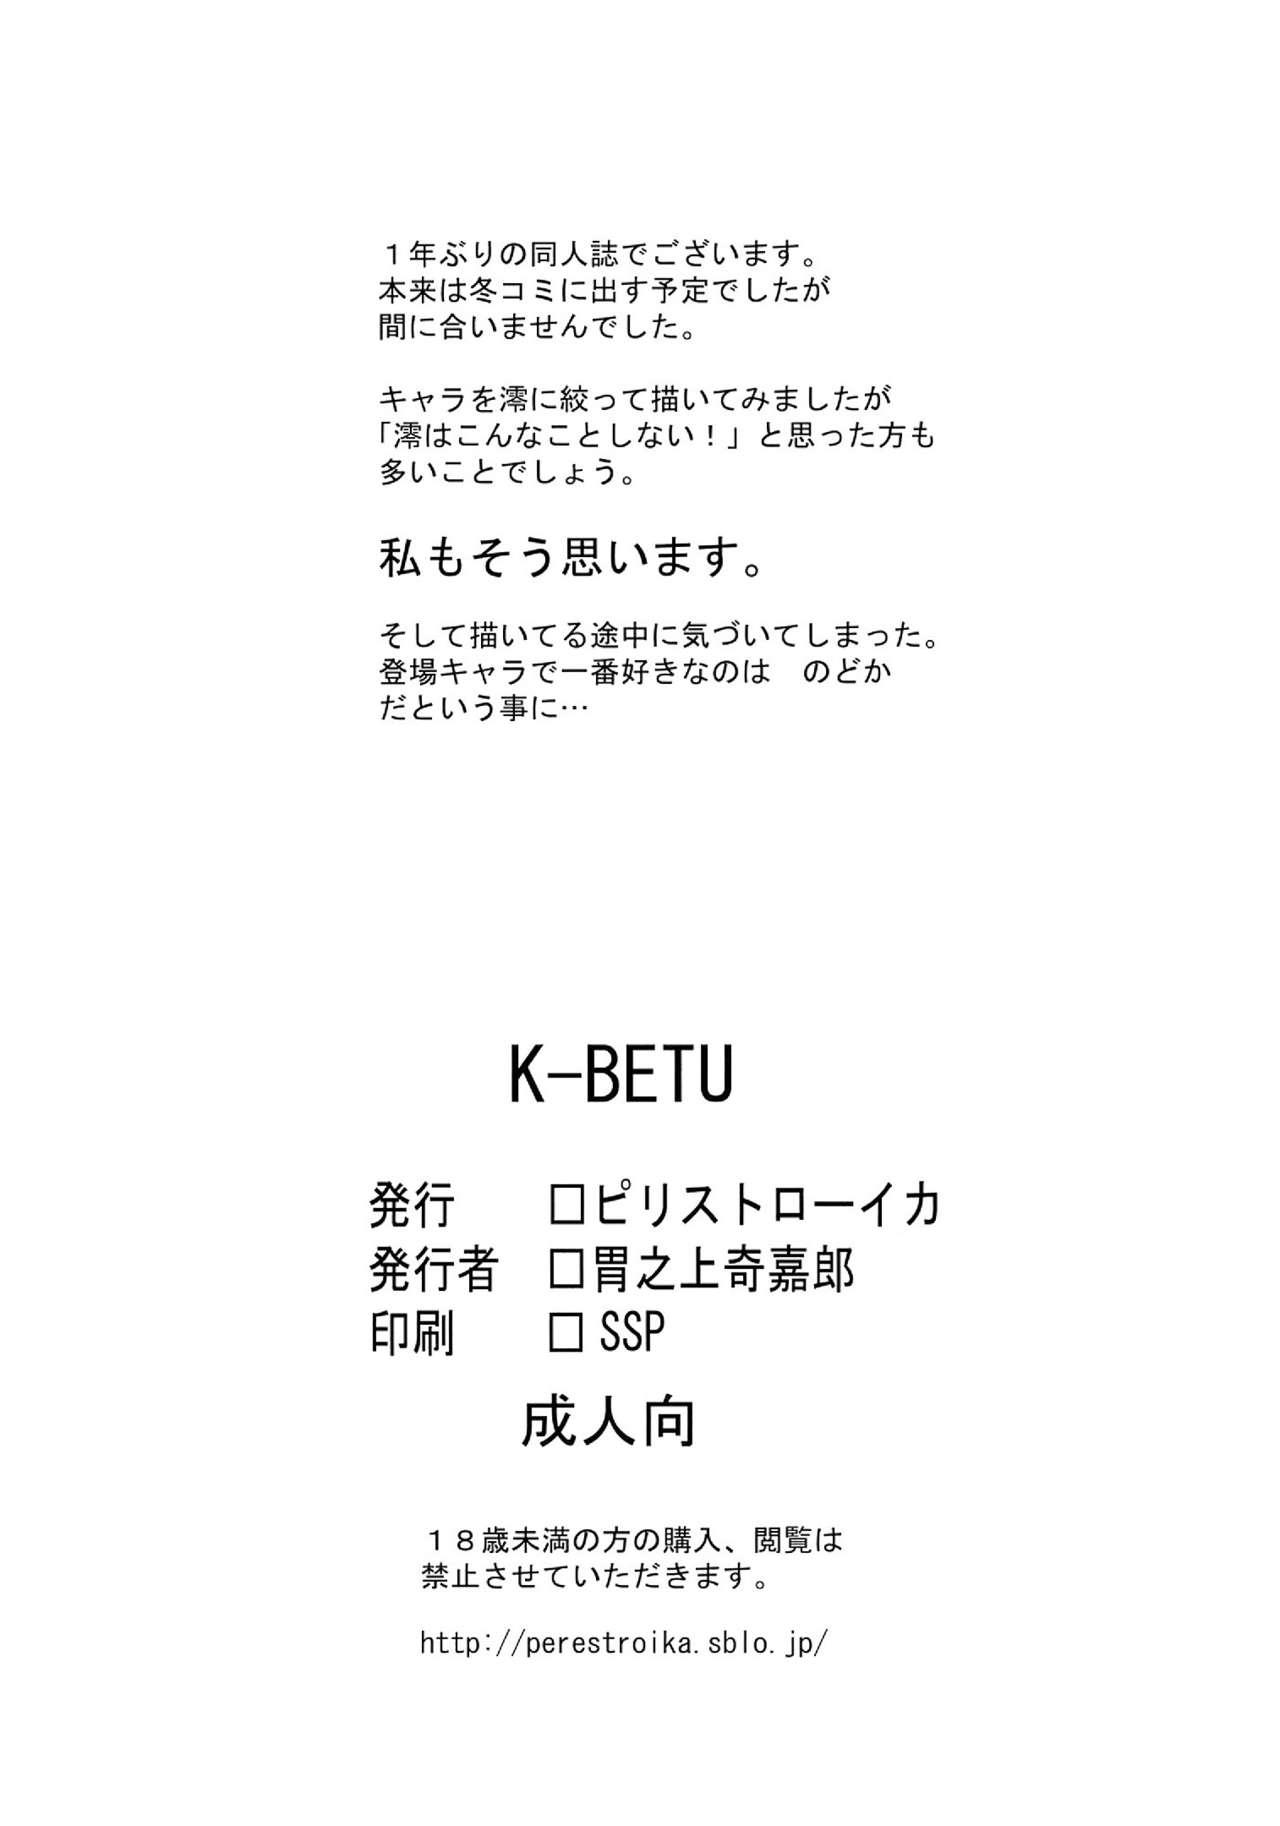 K-BETU 19